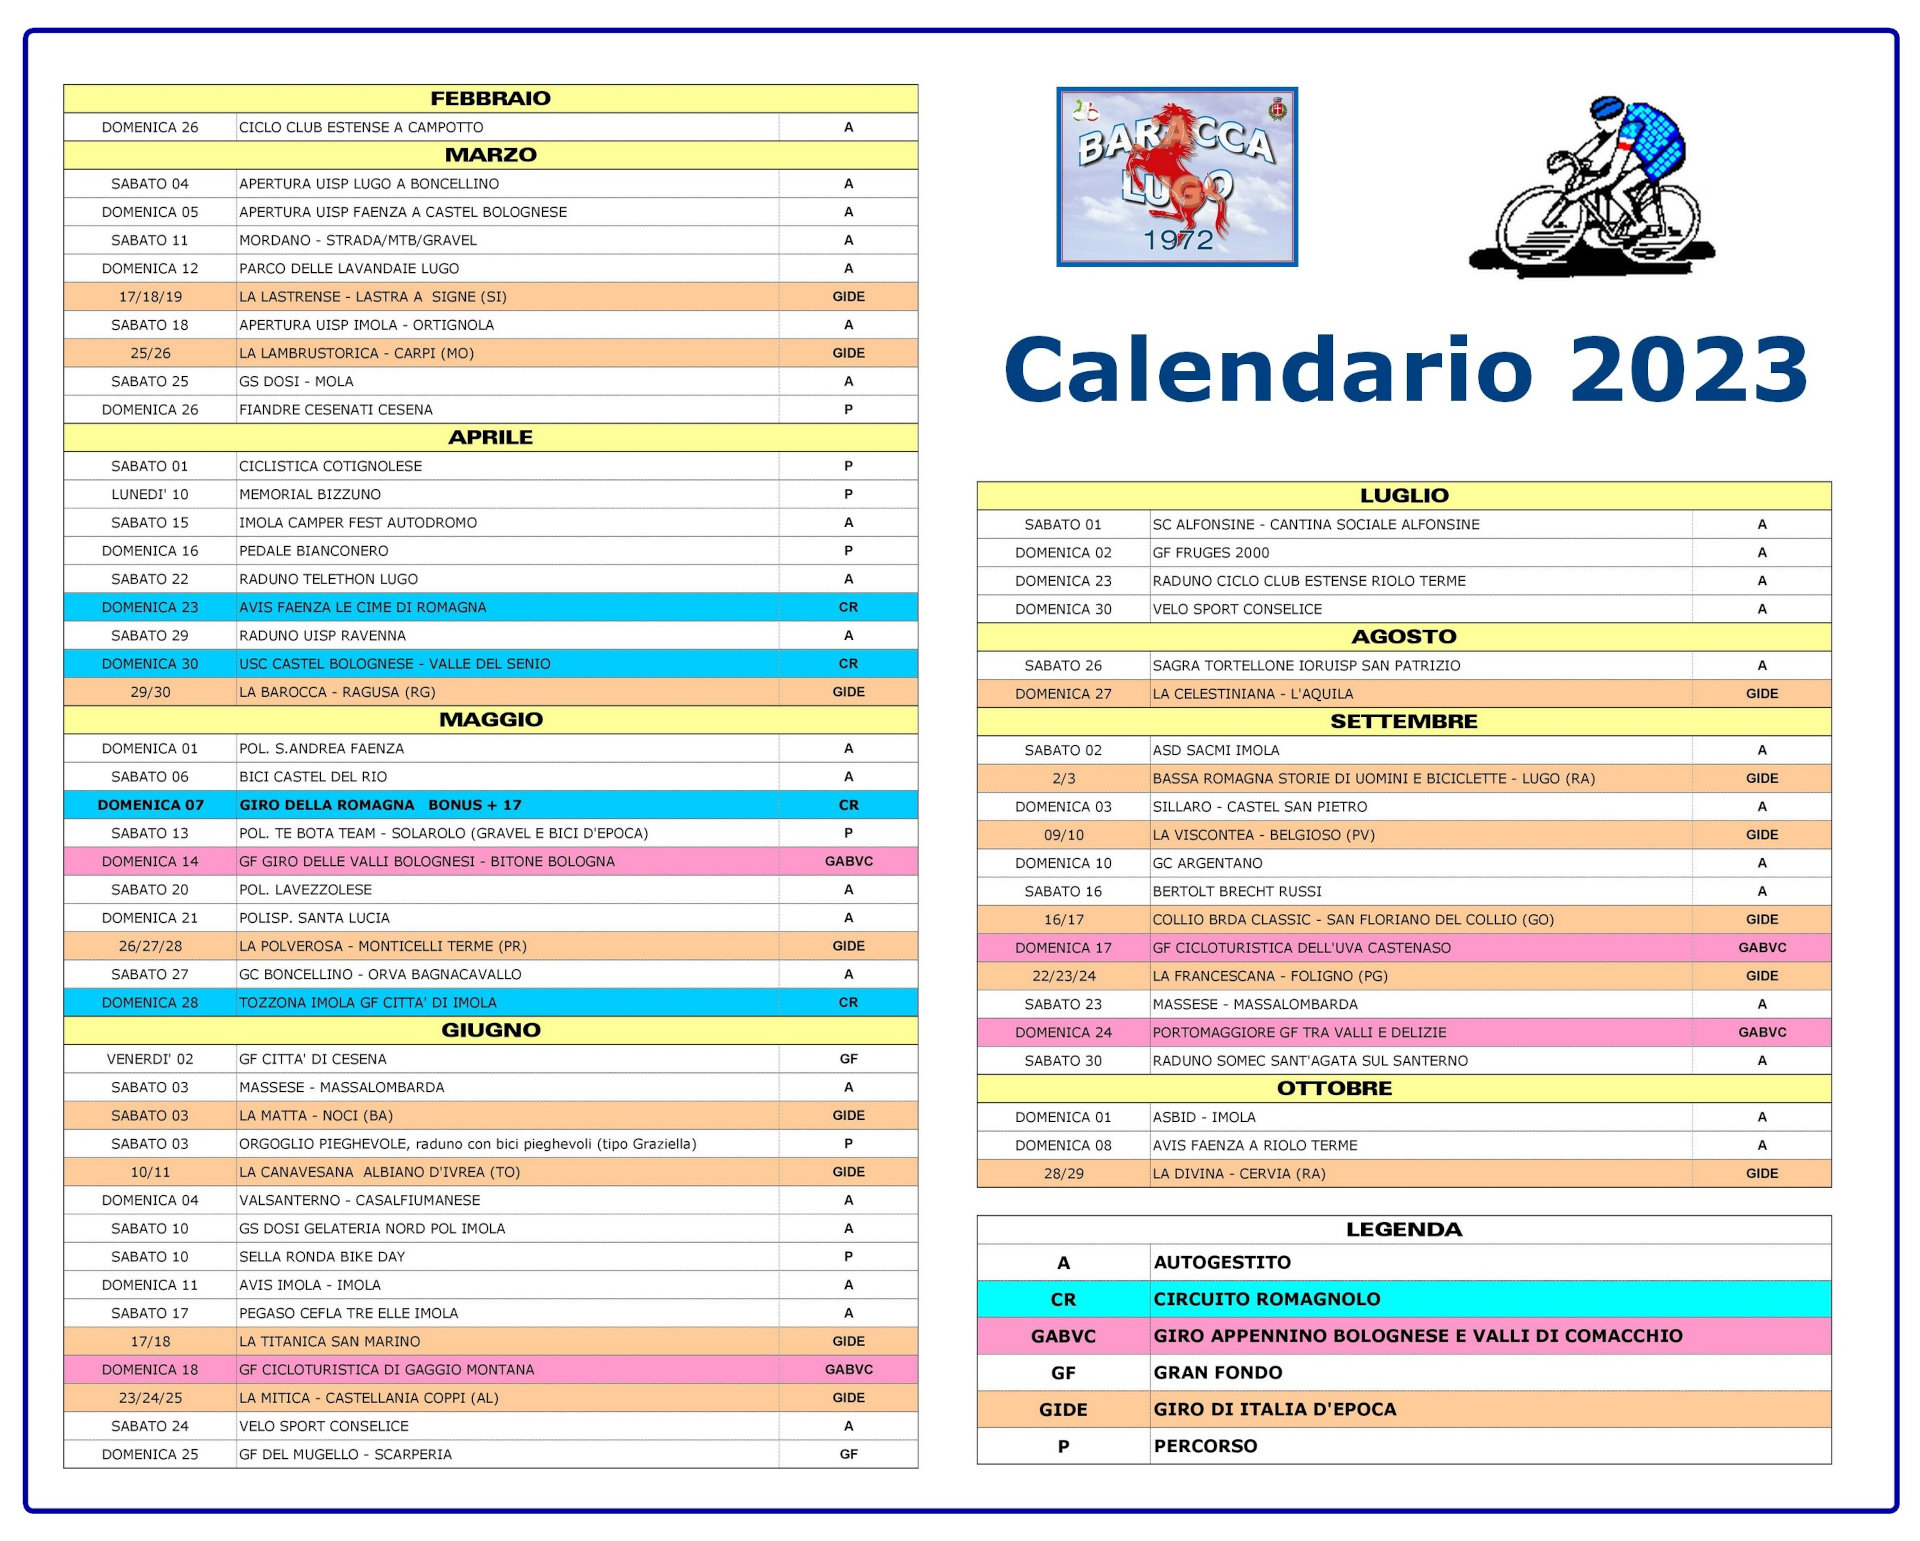 Calendario EVENTI 2023